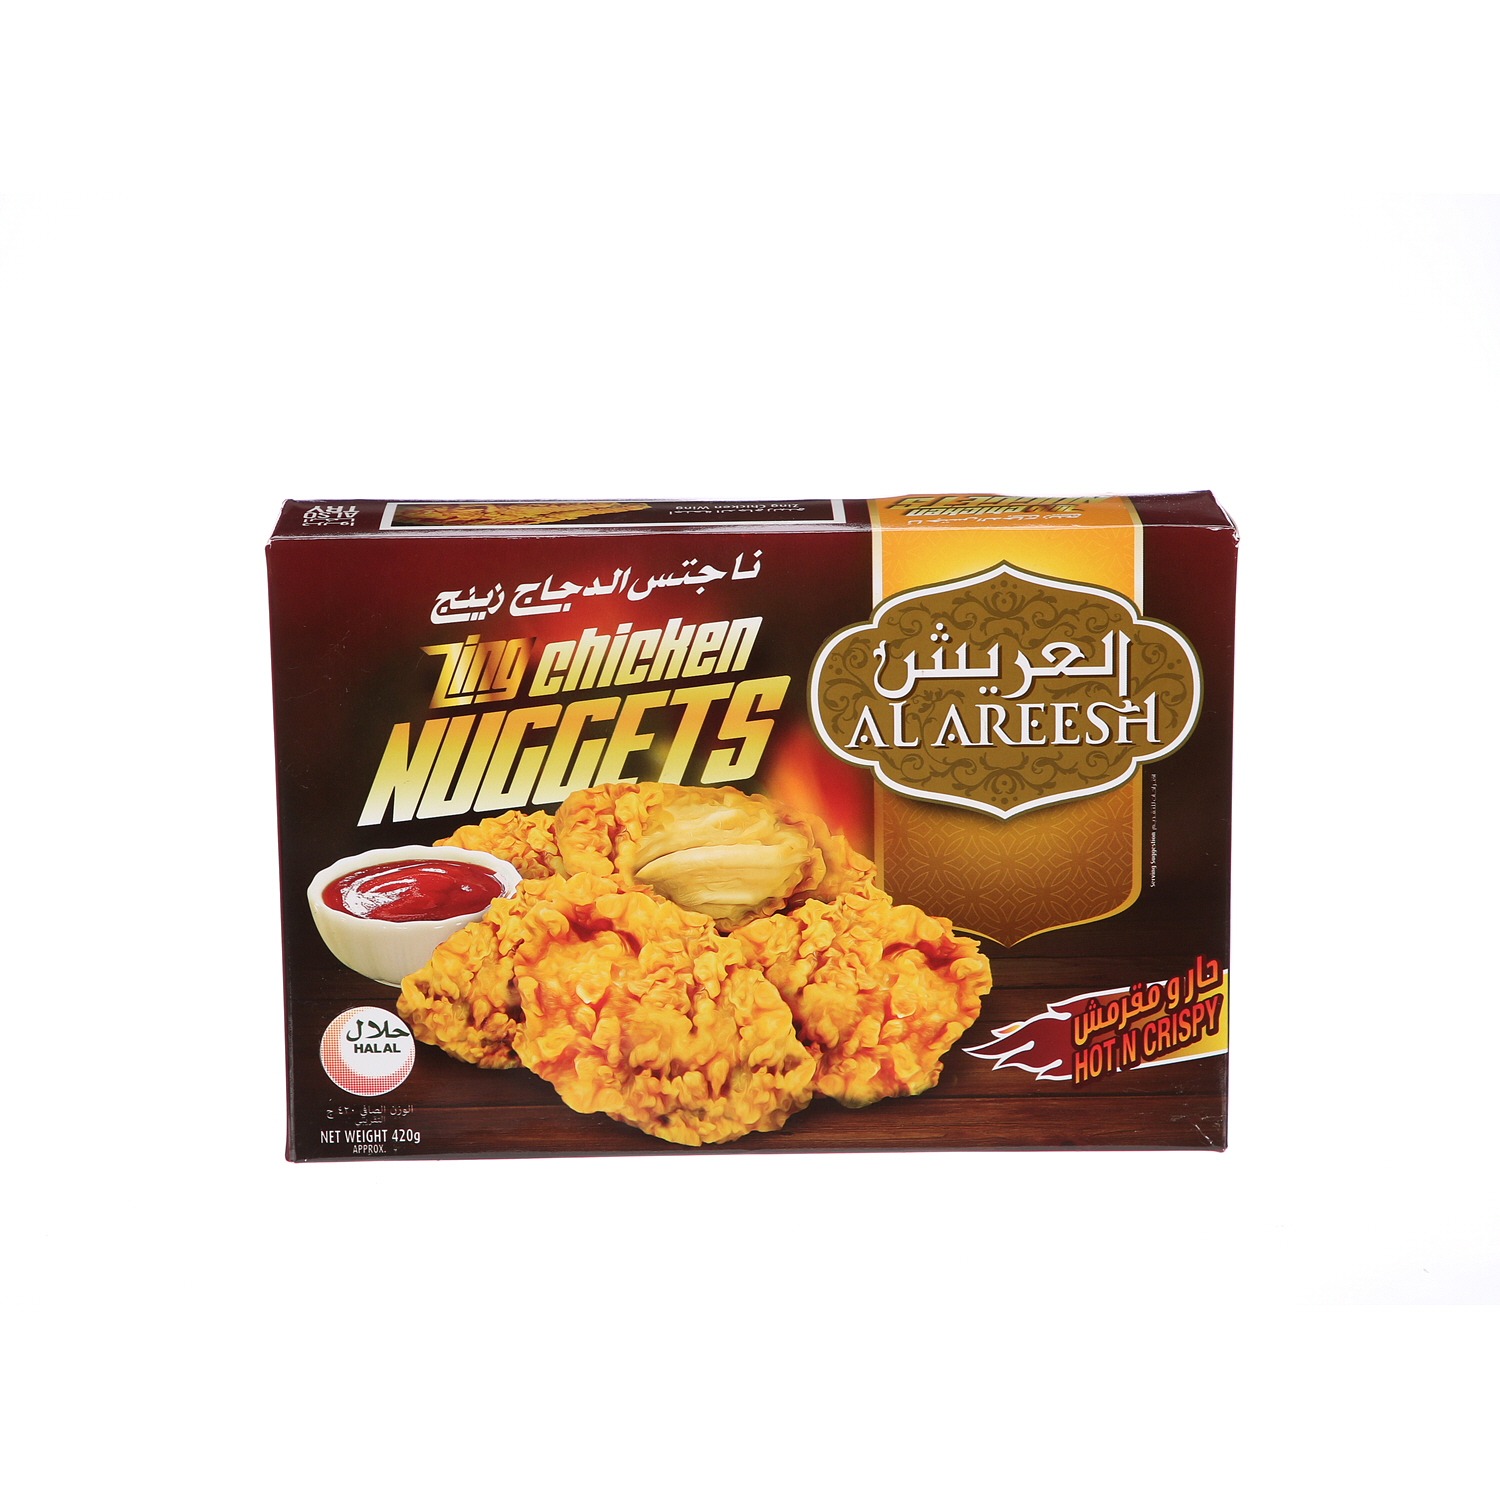 Al Areesh Zinger Chicken Nuggets 420 g